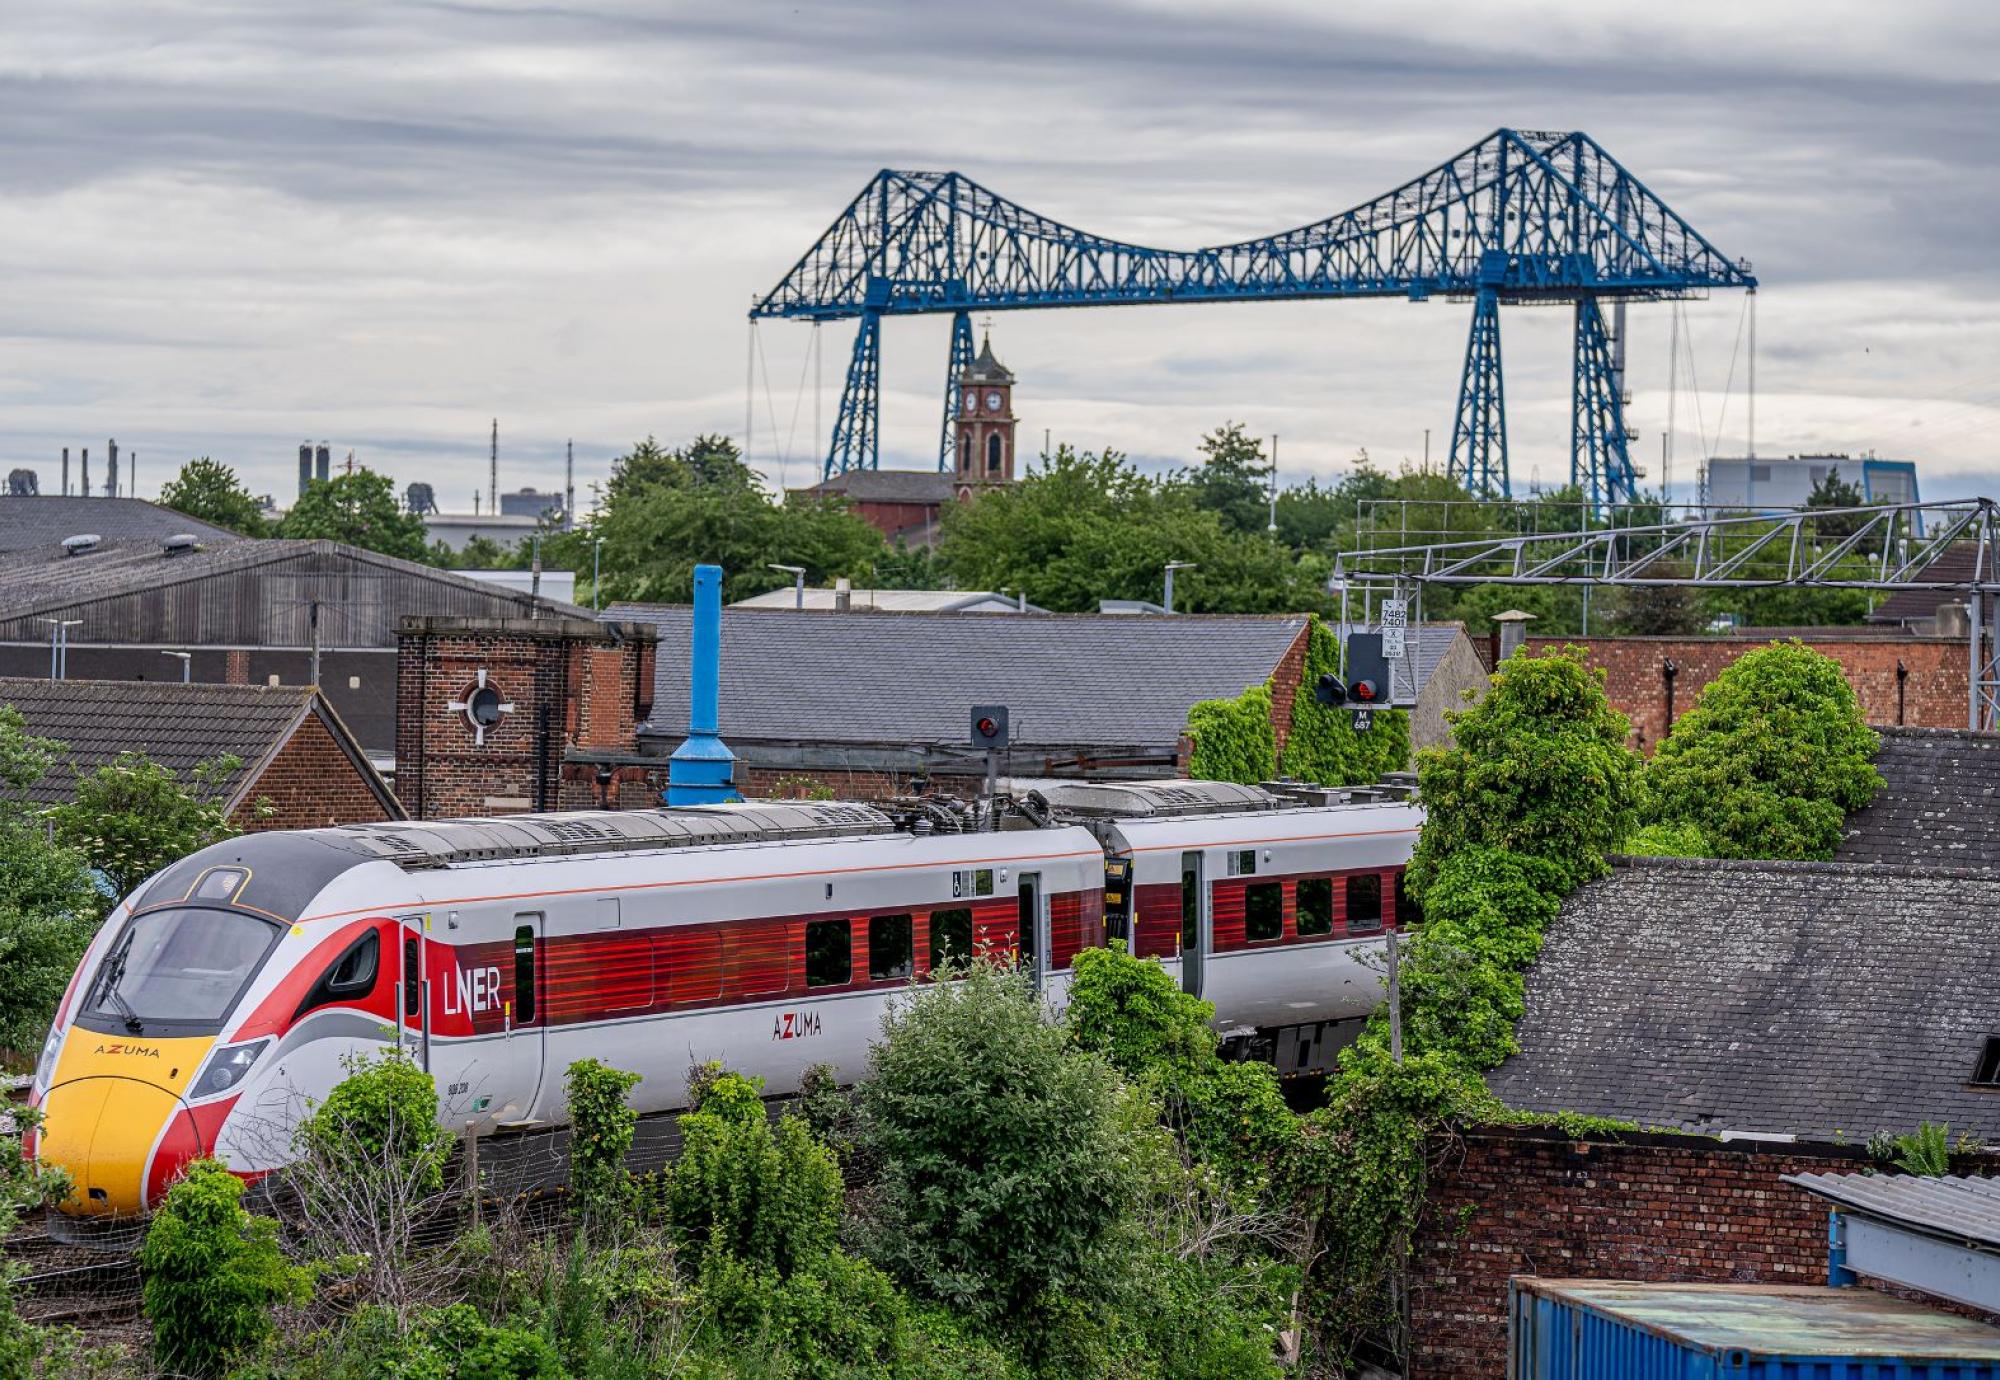 LNER train in Middlesbrough